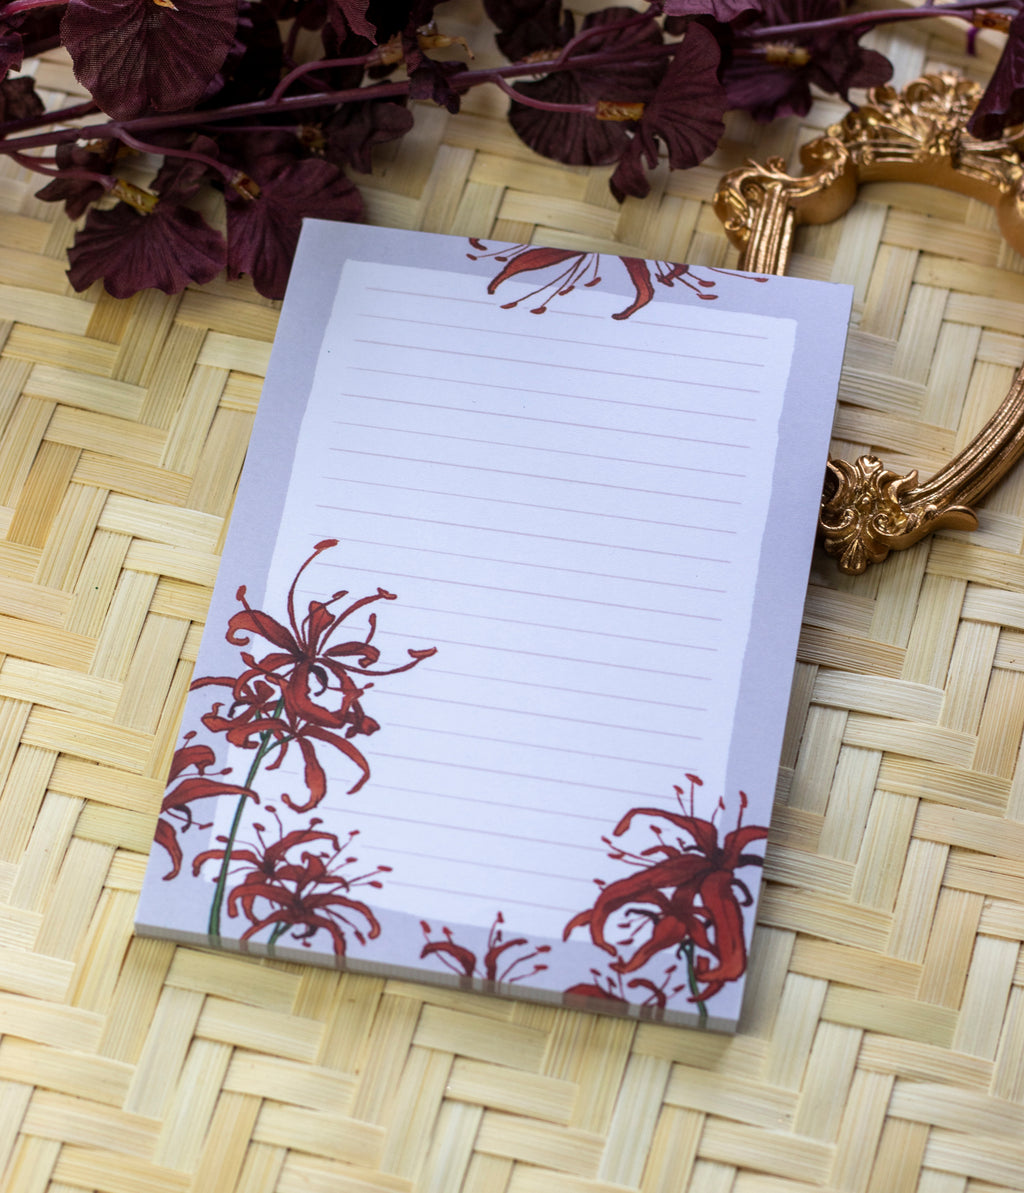 Spider Lilies | A6 Notepad - Aurigae Art &Illustration